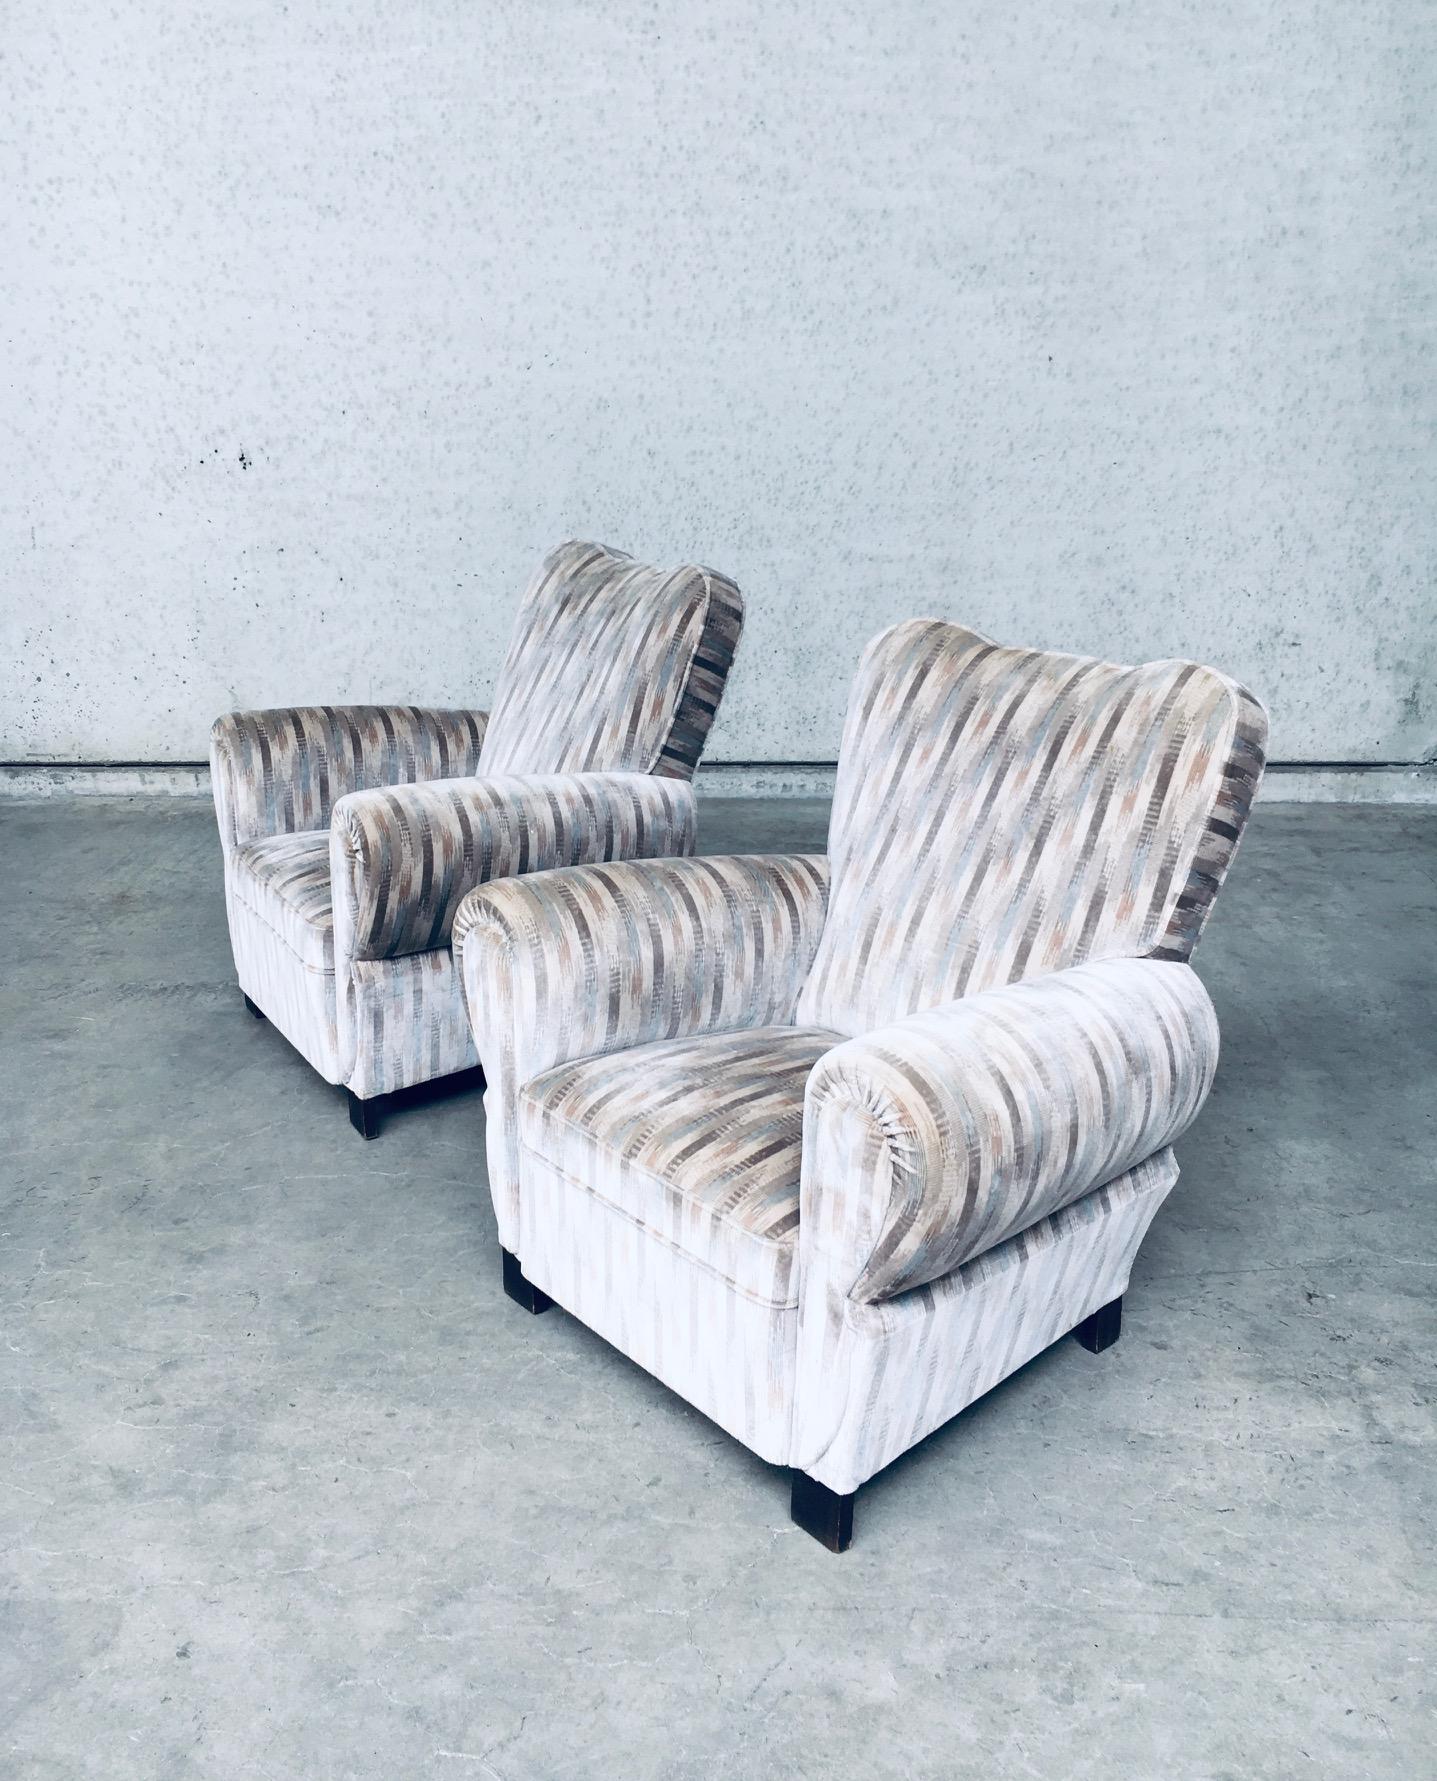 Belgian Art Deco Design Lounge Arm Chair set, Belgium 1940's For Sale